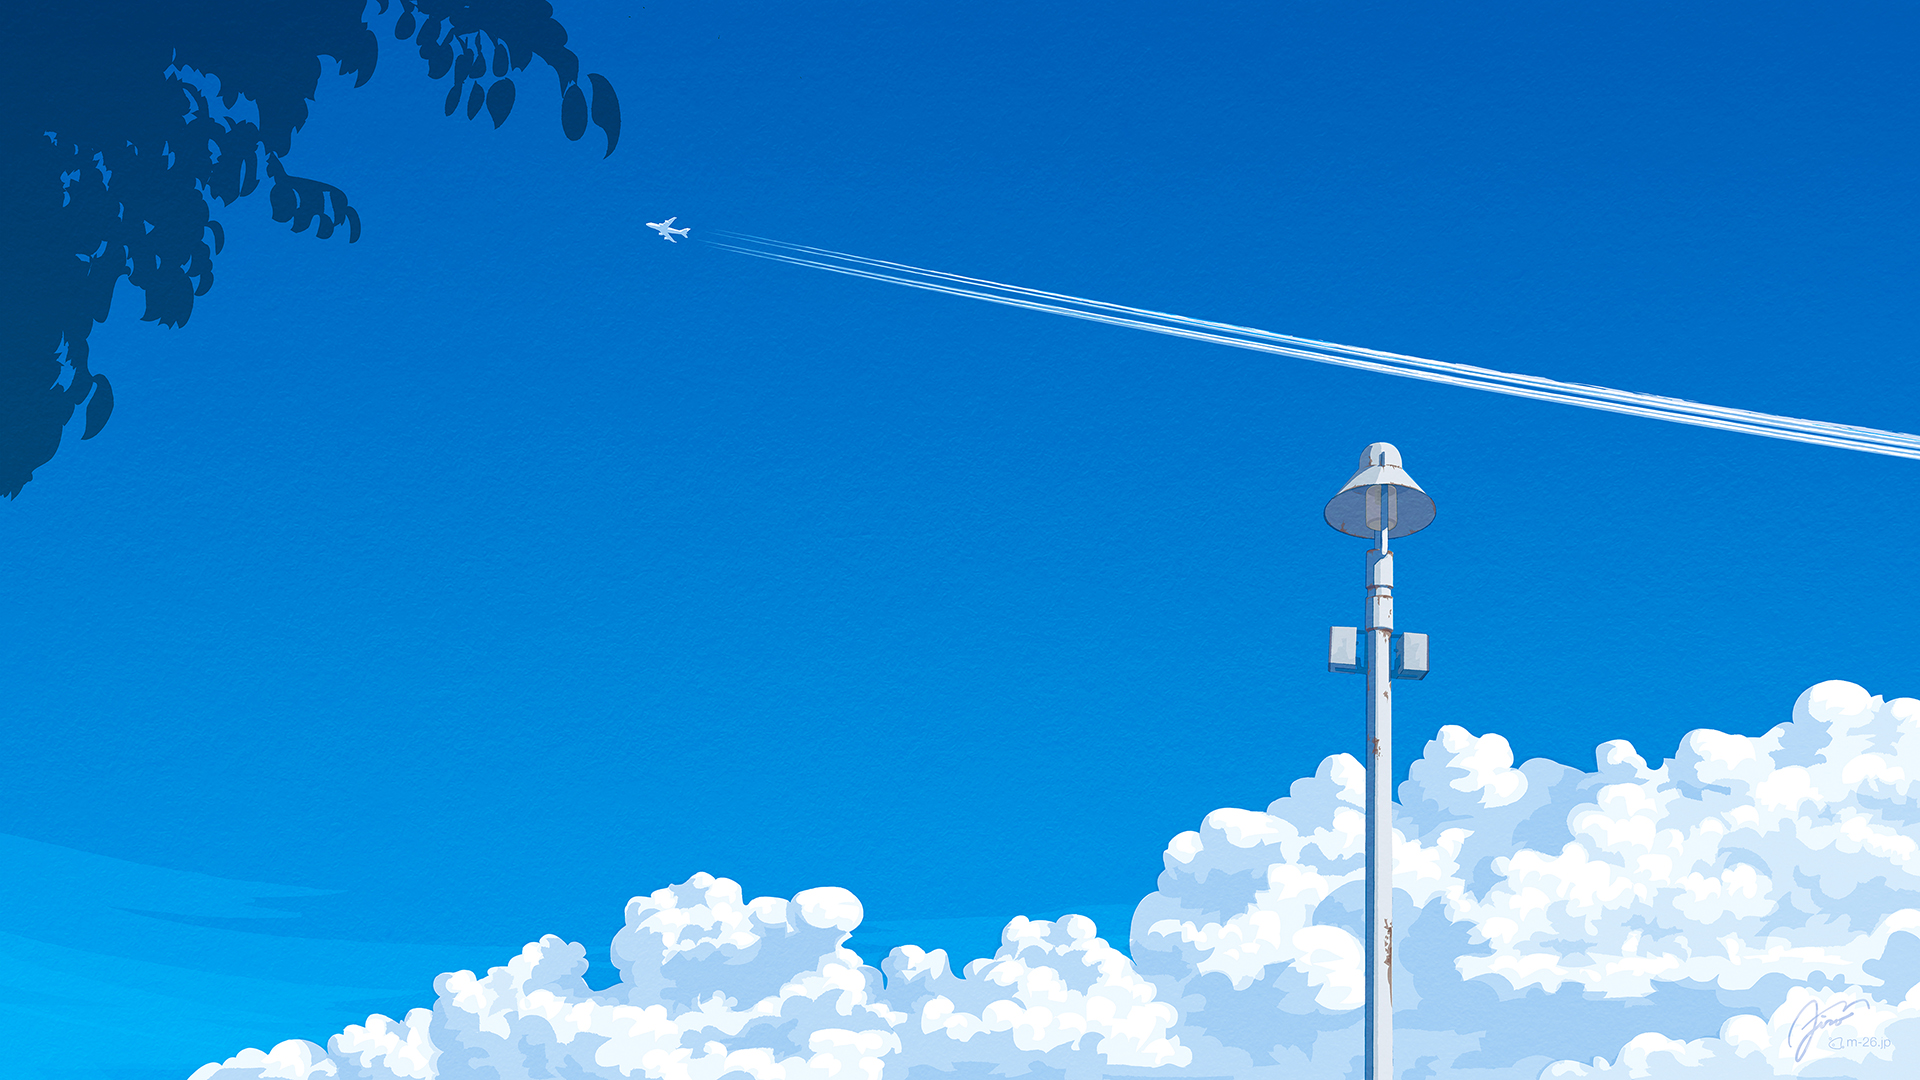 General 1920x1080 m26 digital art artwork illustration digital painting landscape nature sky blue clouds condensation watermarked airplane